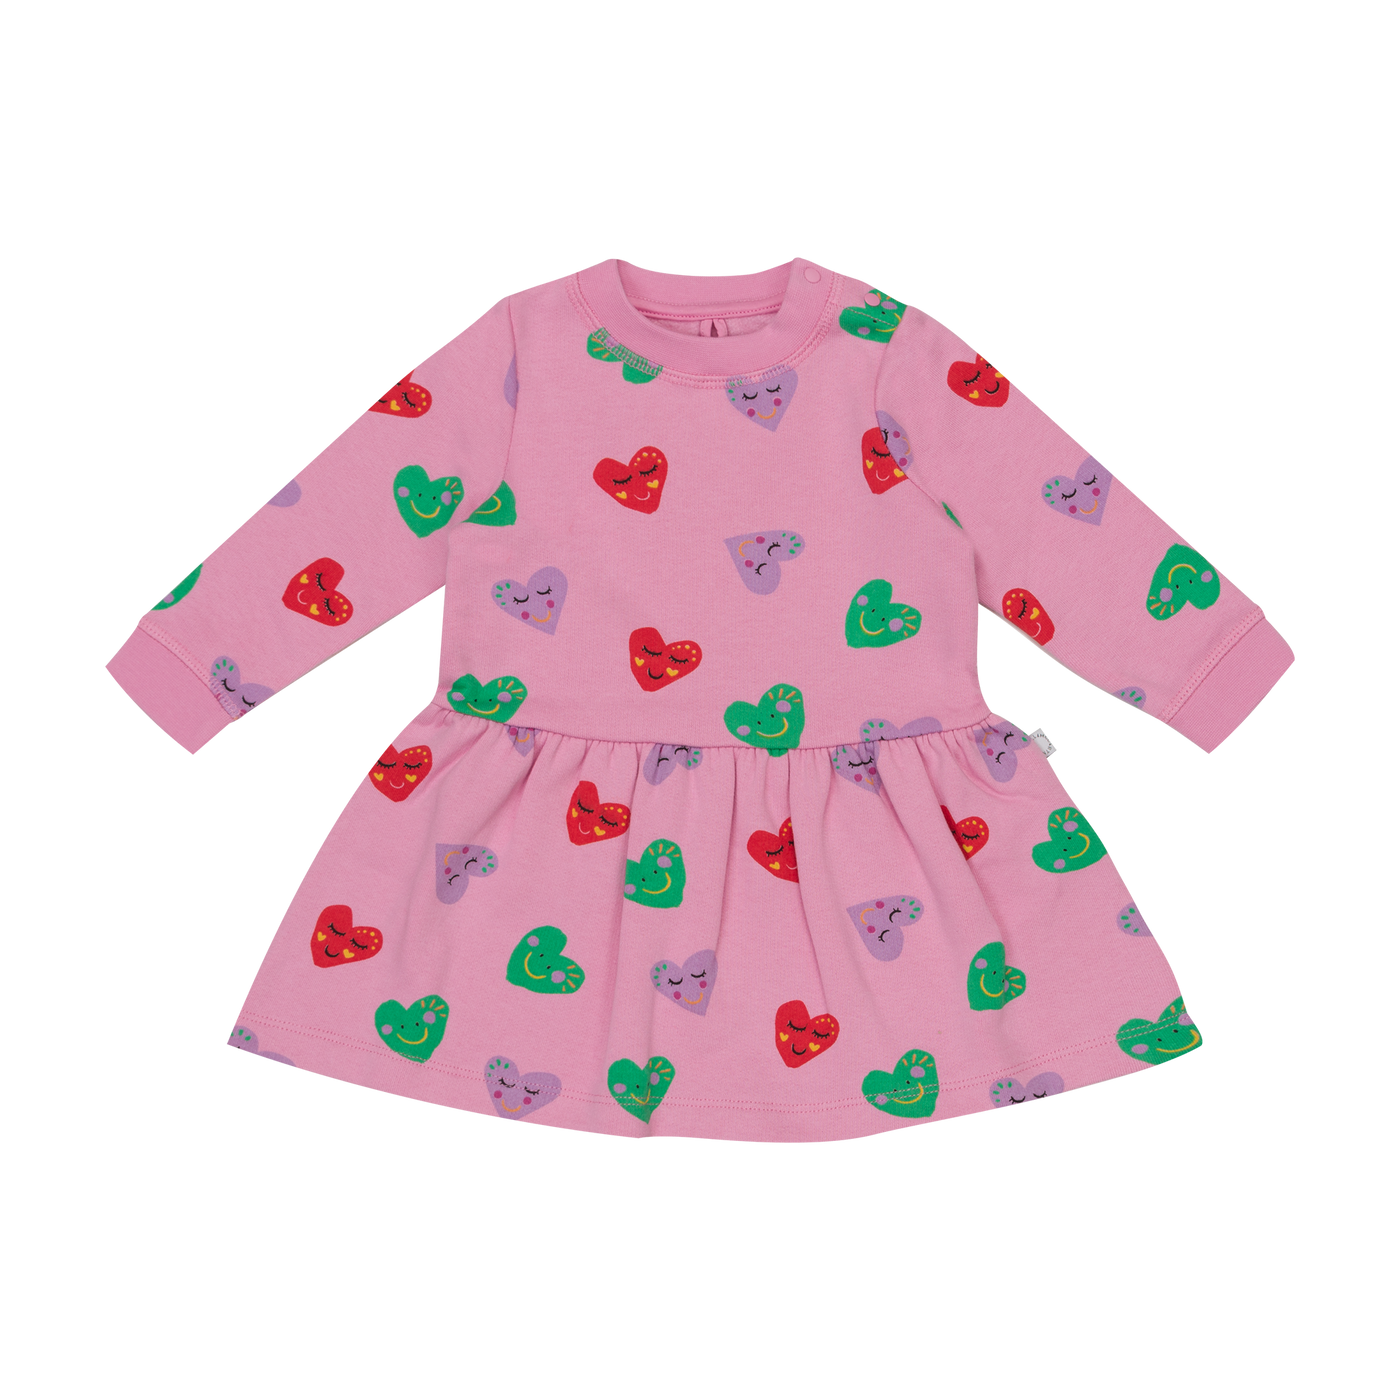 Stella McCartney Kids - Dress with hearts